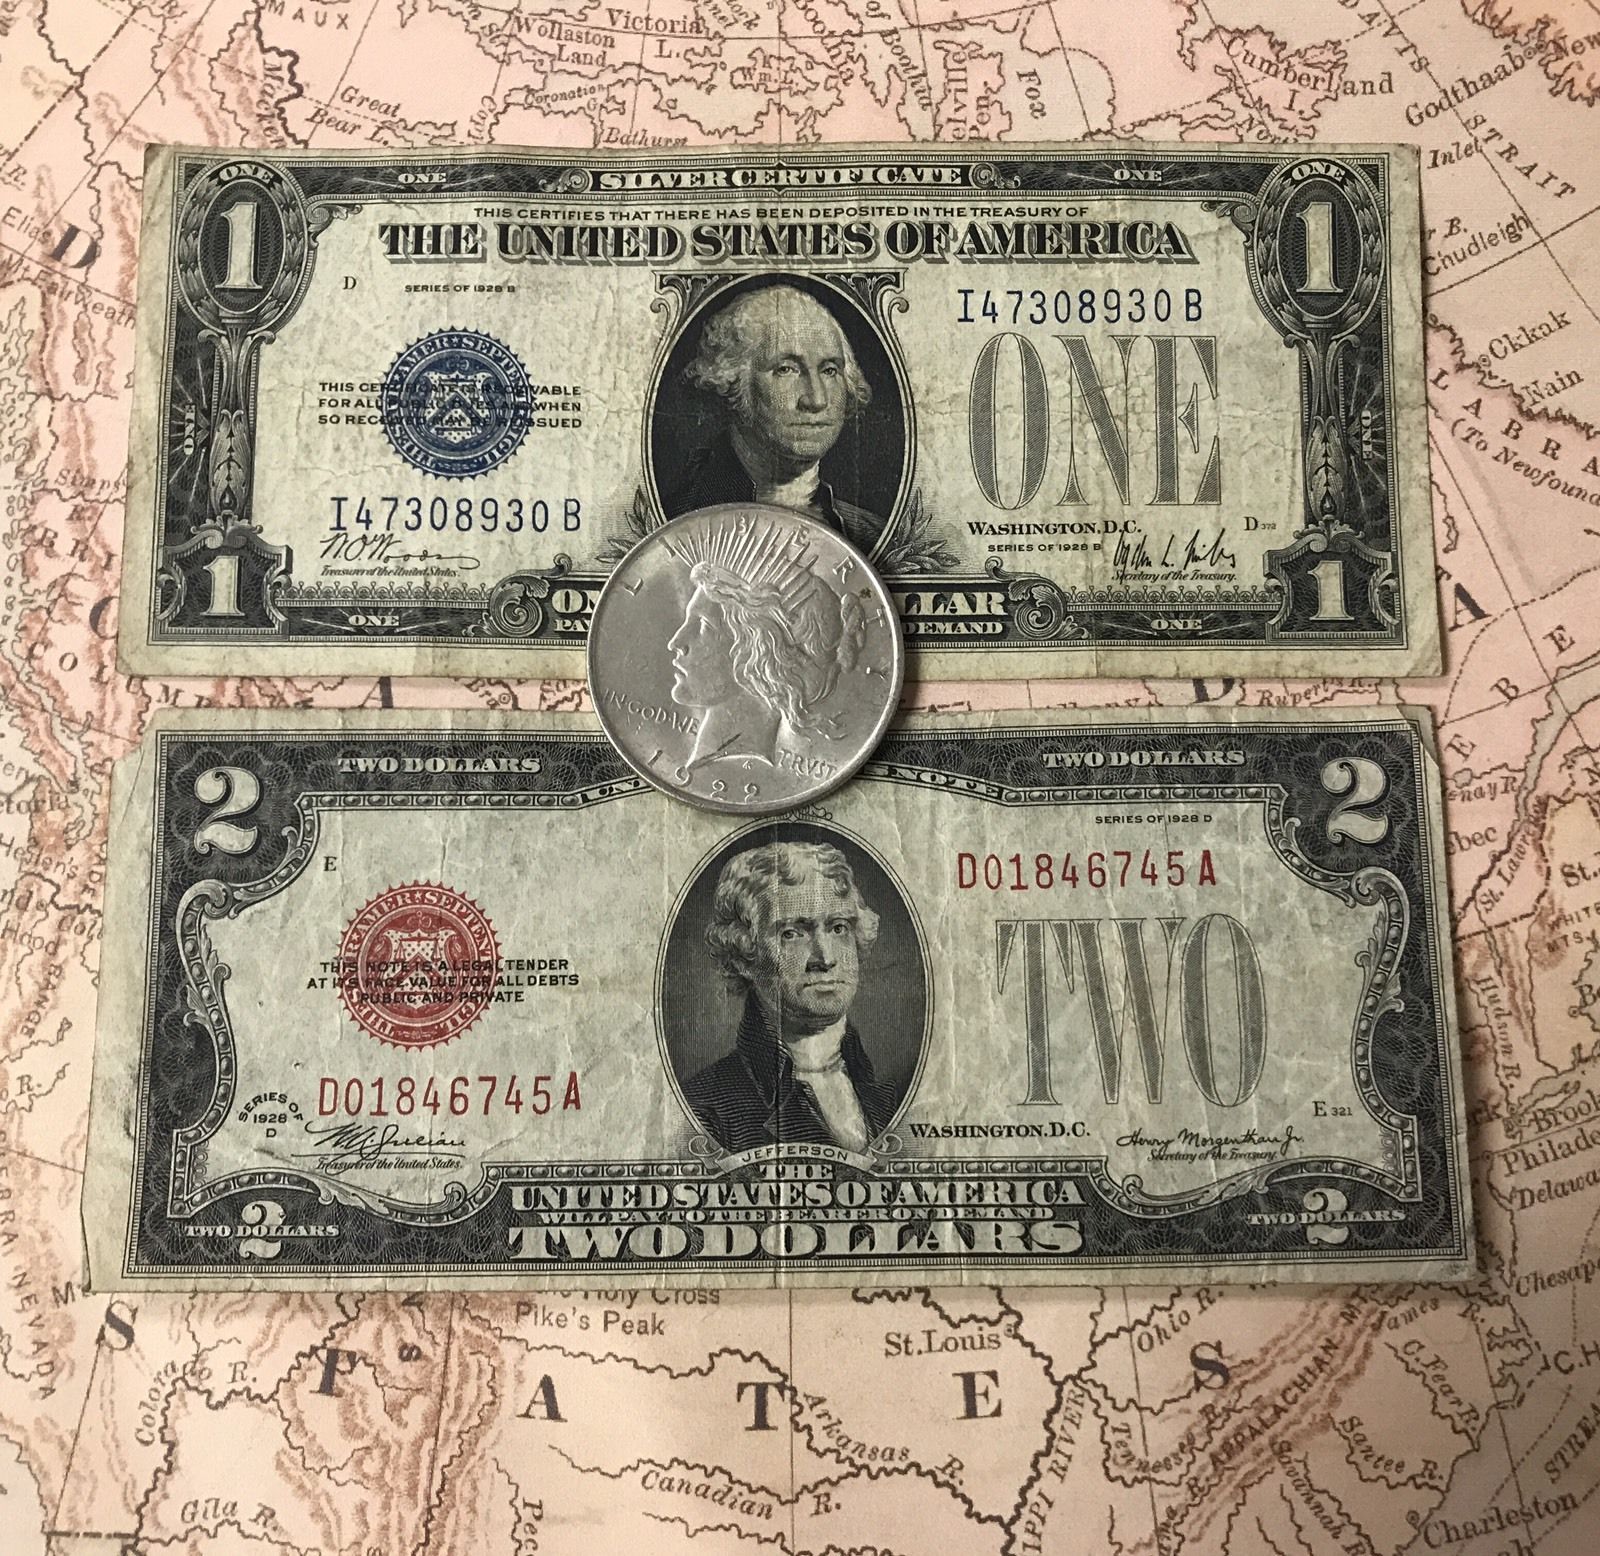 1934 Five Dollar Bill Blue Seal Note Randomly Hand Picked Vg//Fine FREE SHIPPING